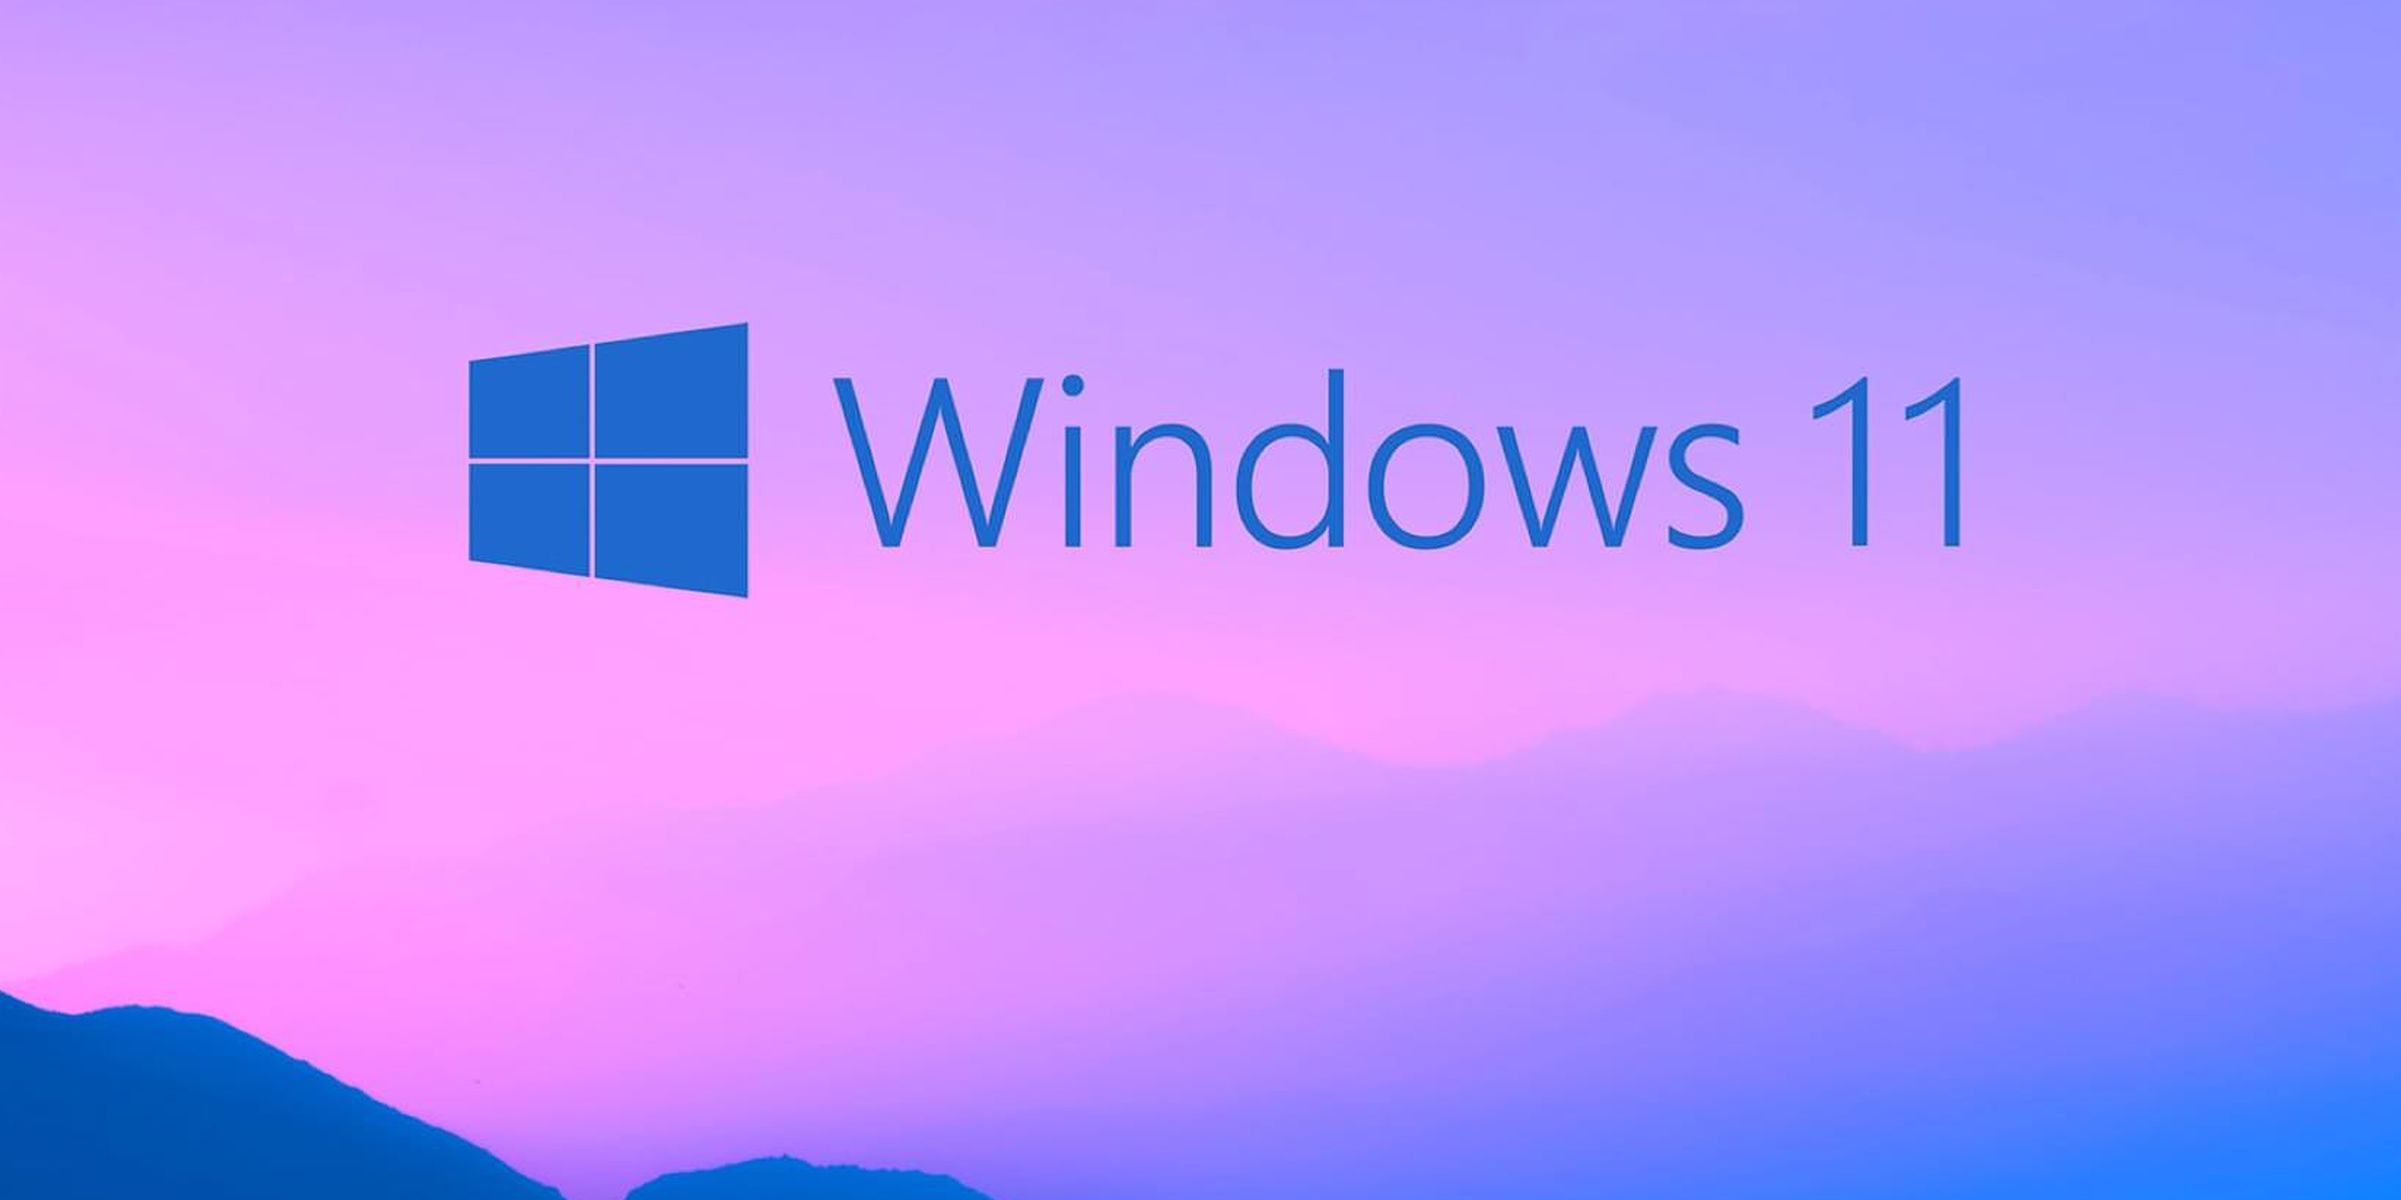 Windows 11 reg. Windows 11 Pro. Шиндовс 11. Картинки Windows 11. Windows oboy.